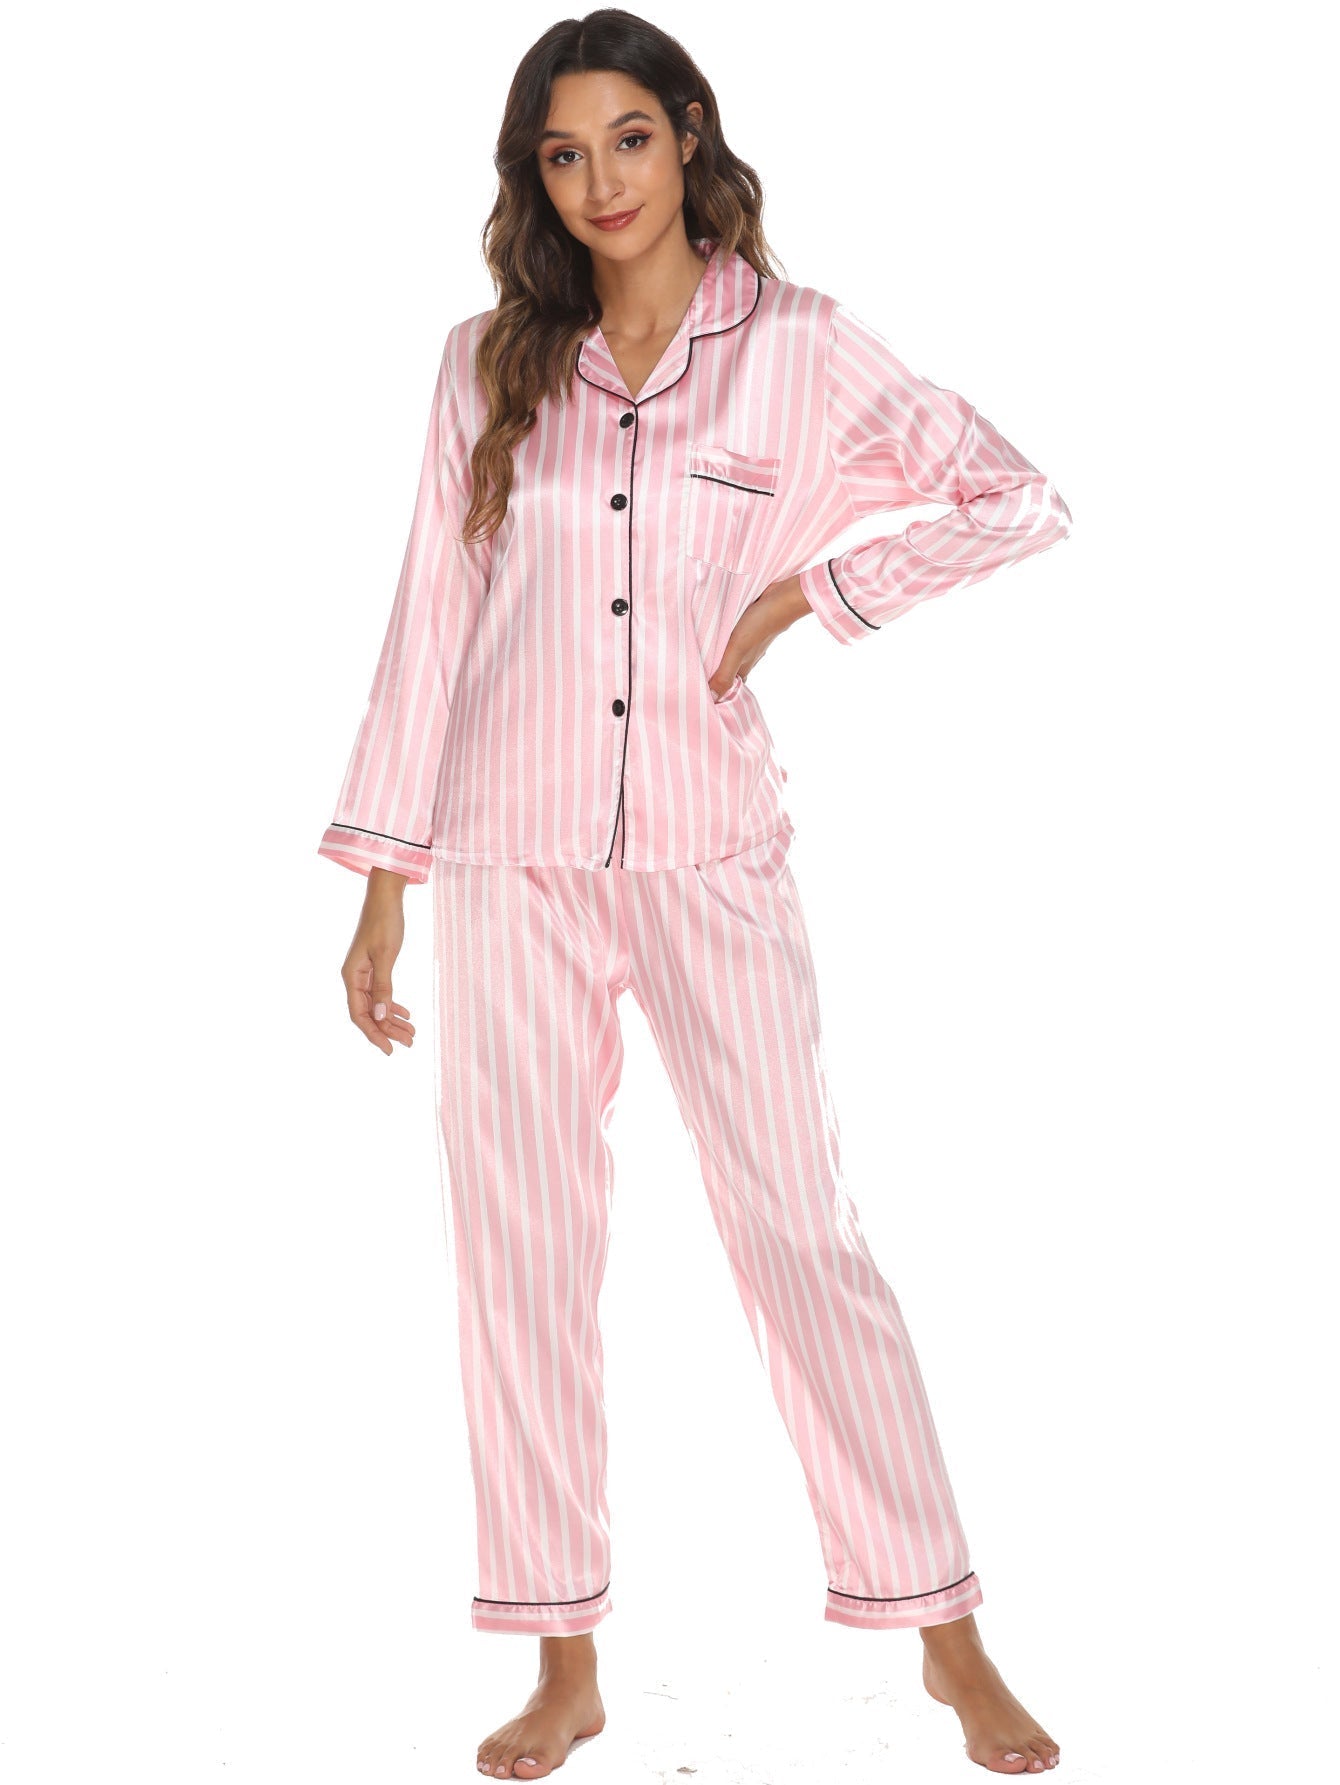 Home Wear Suit Pajamas Women Cardigan Long Sleeve Long Sleeve Autumn